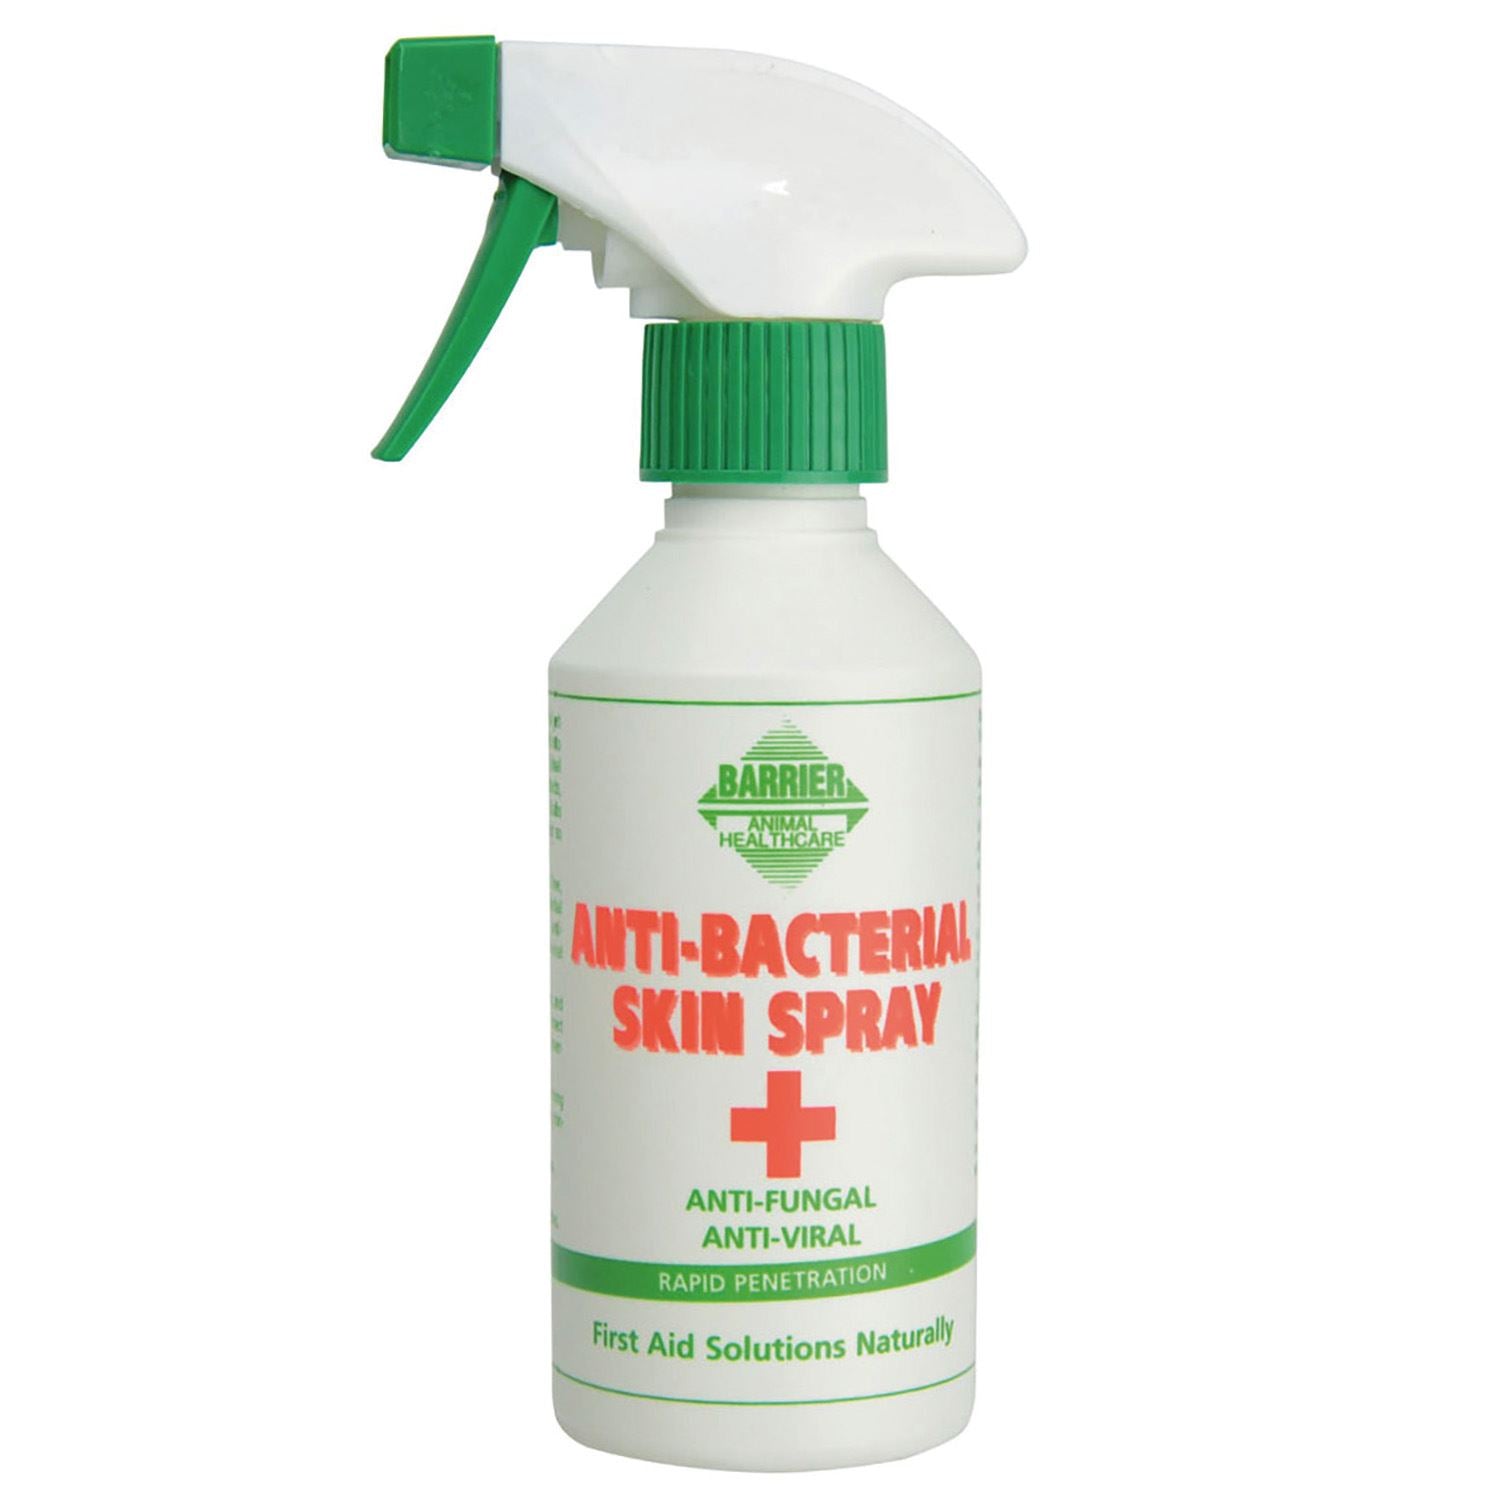 Barrier Anti-Bacterial Skin Spray - Just Horse Riders